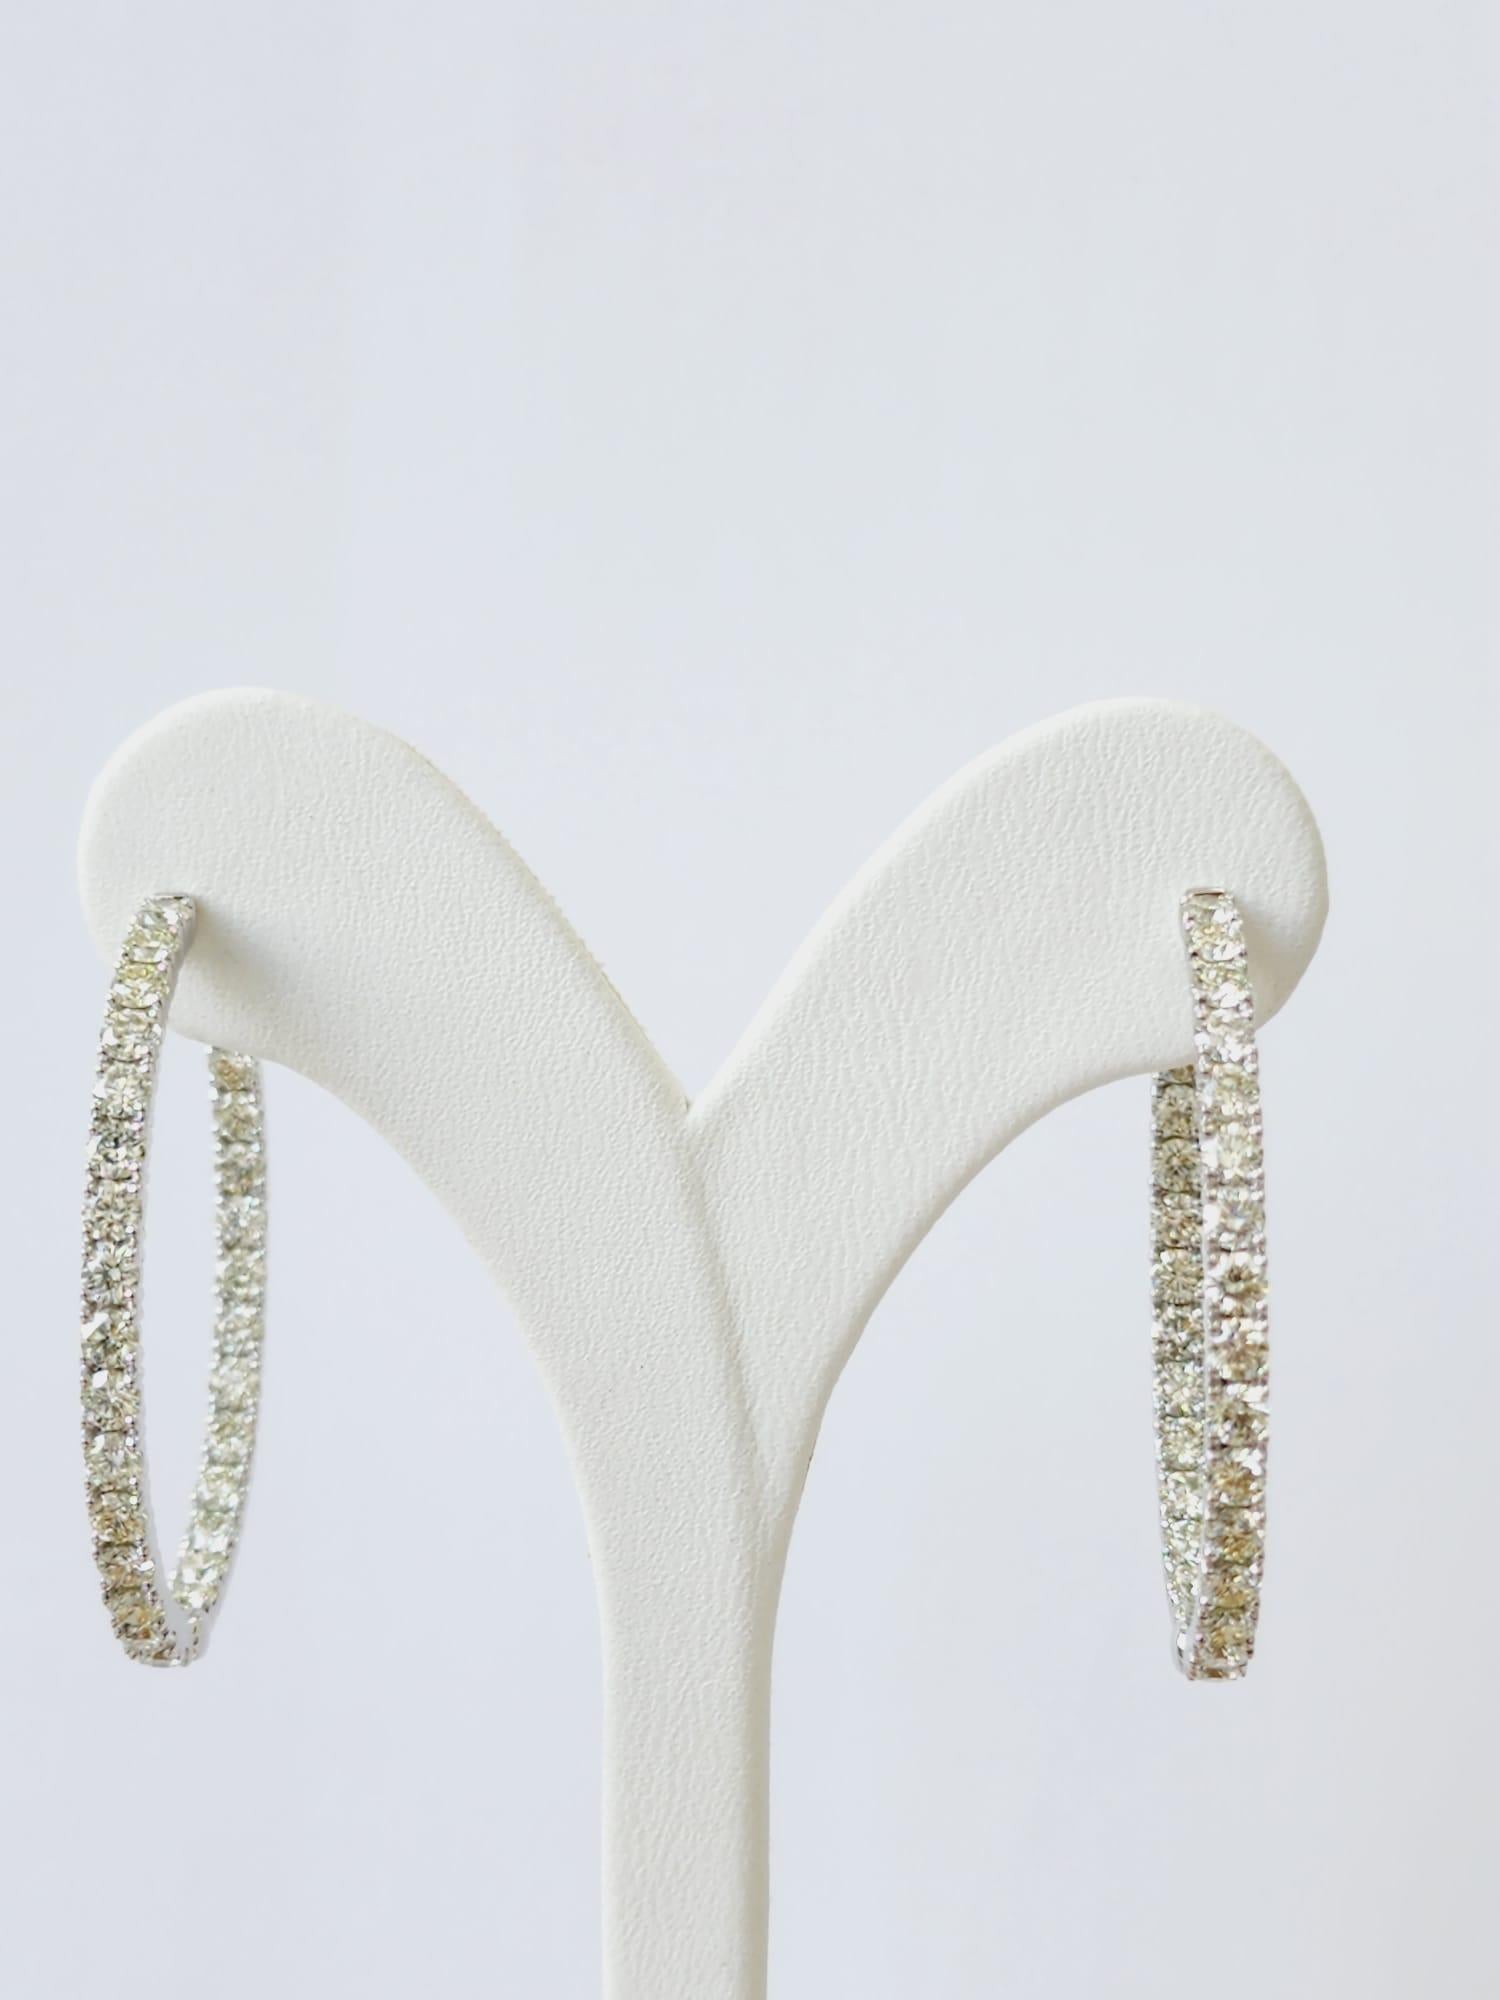 Diamond Hoop Earrings 4.7 Carat in 18 K White Gold  For Sale 2